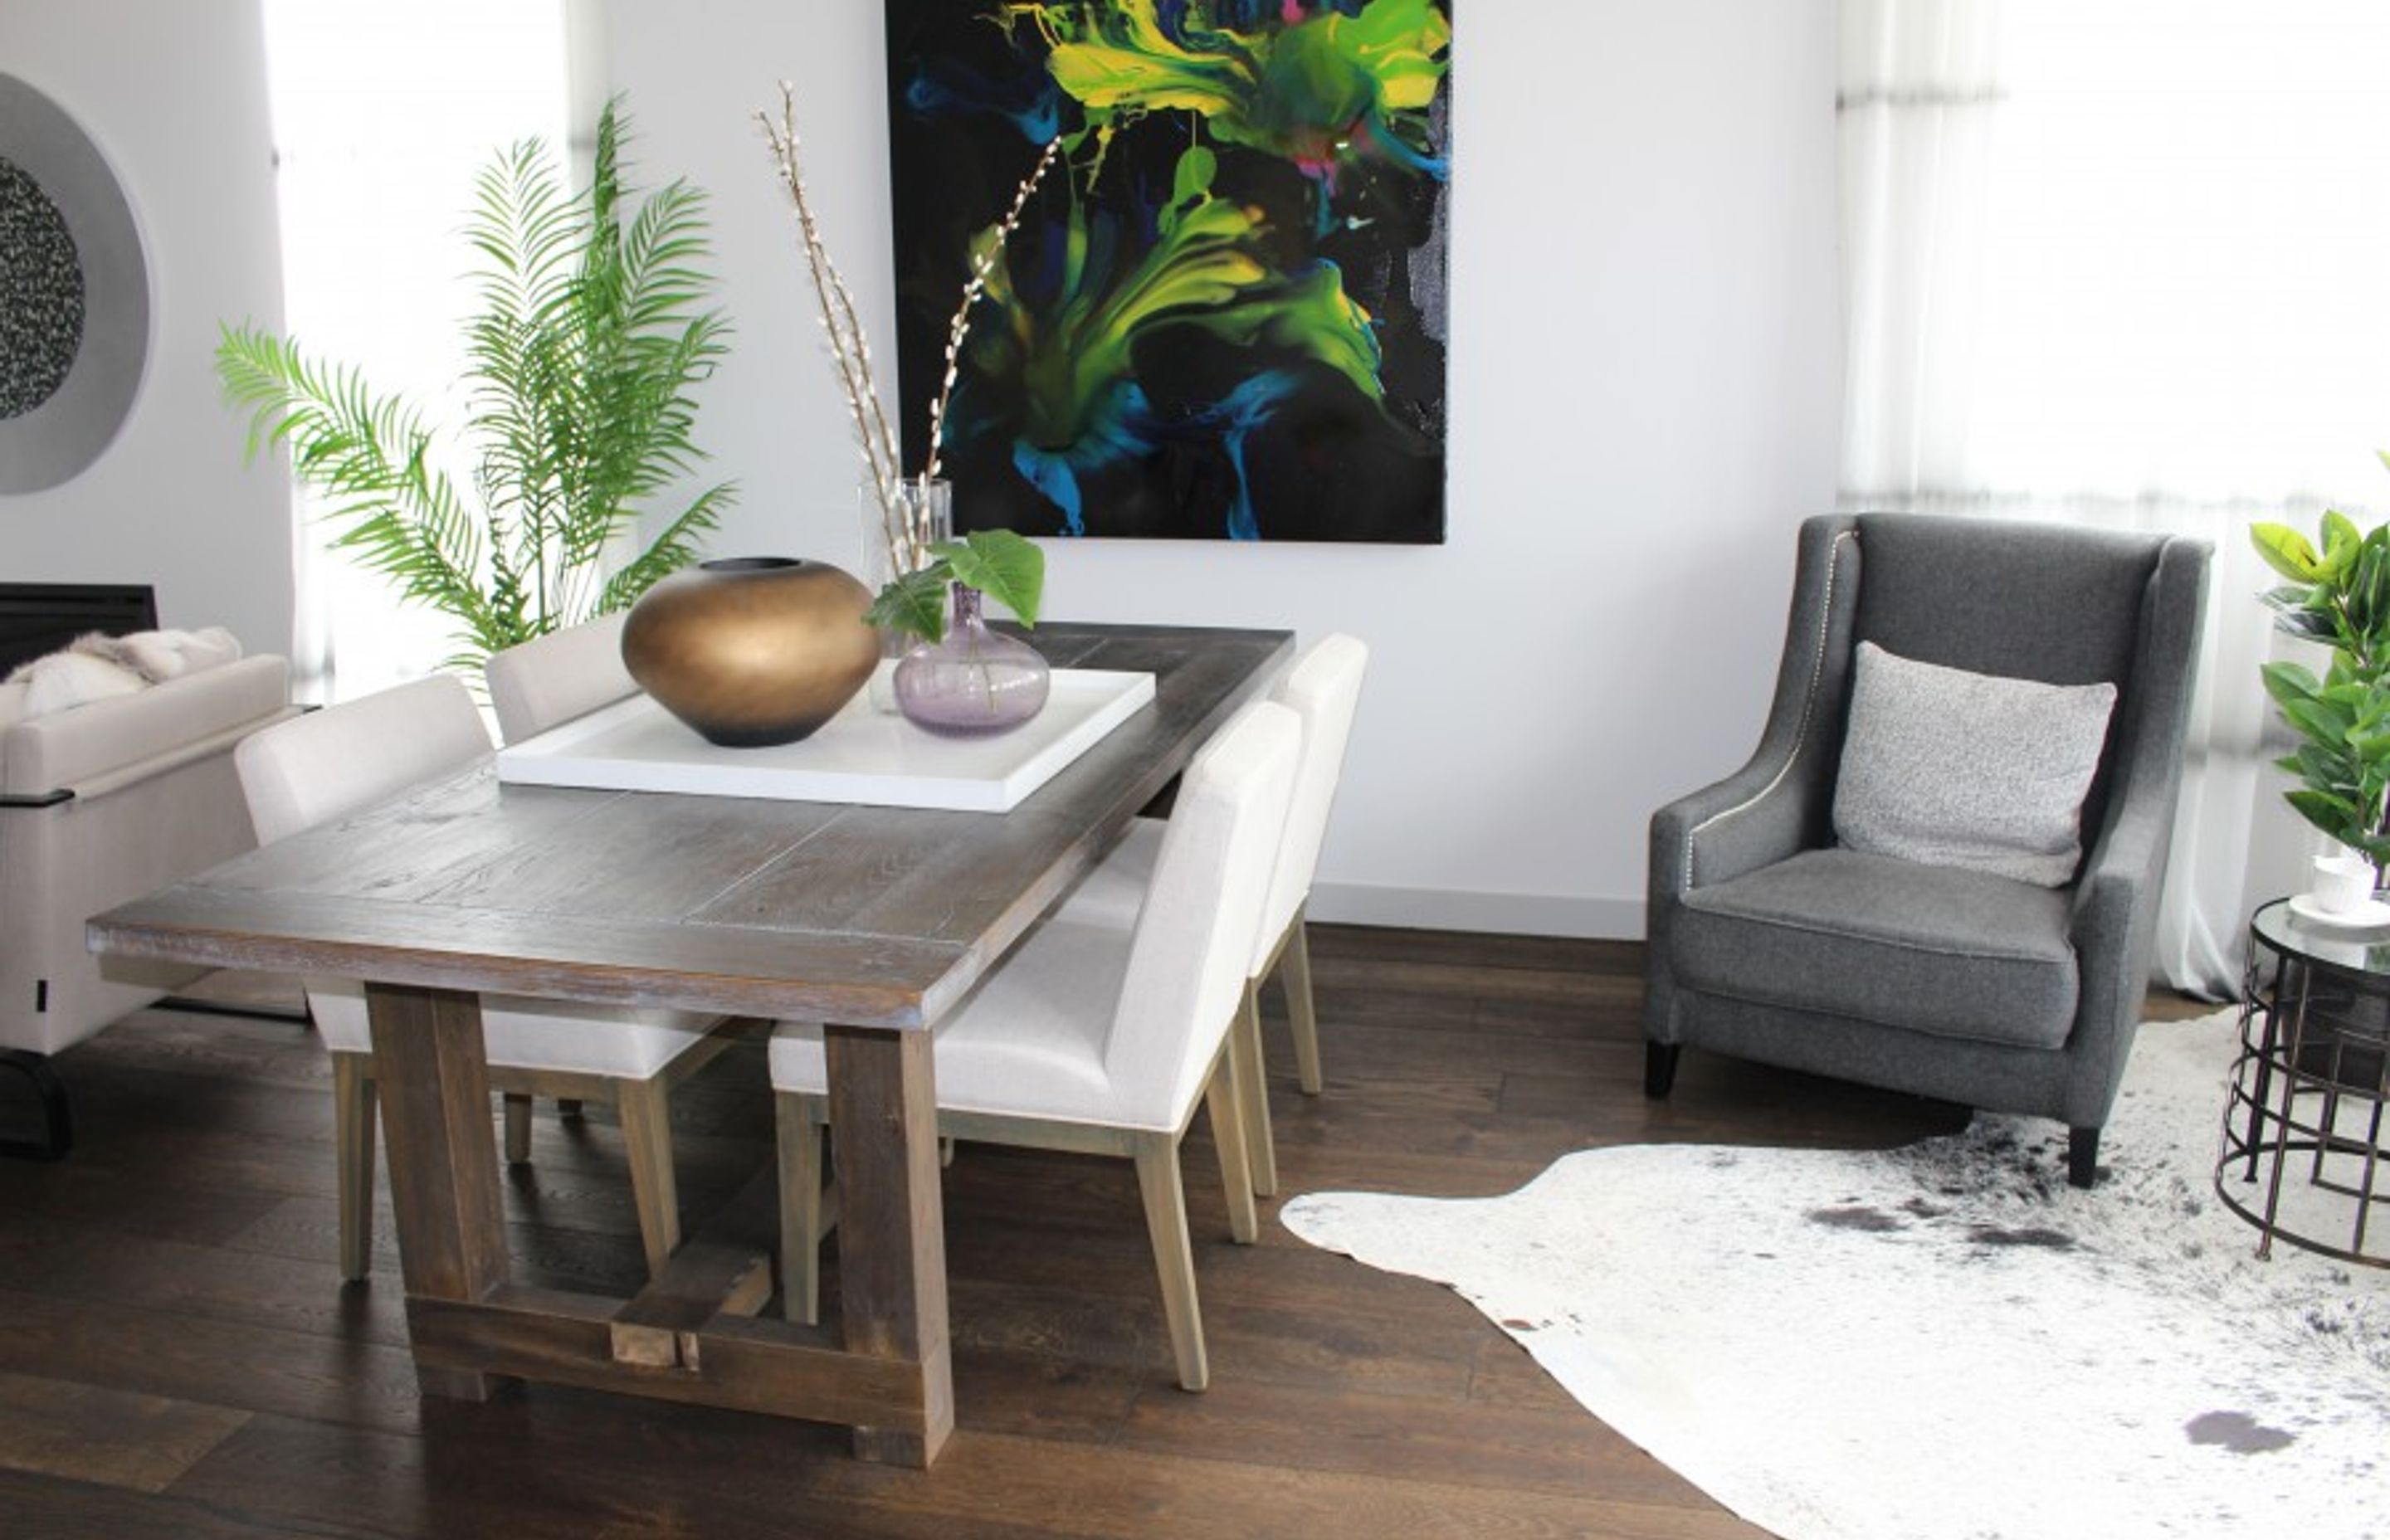 Towai I - Light Feature Engineered European Oak Flooring finished w/ Oil in 'Nero'